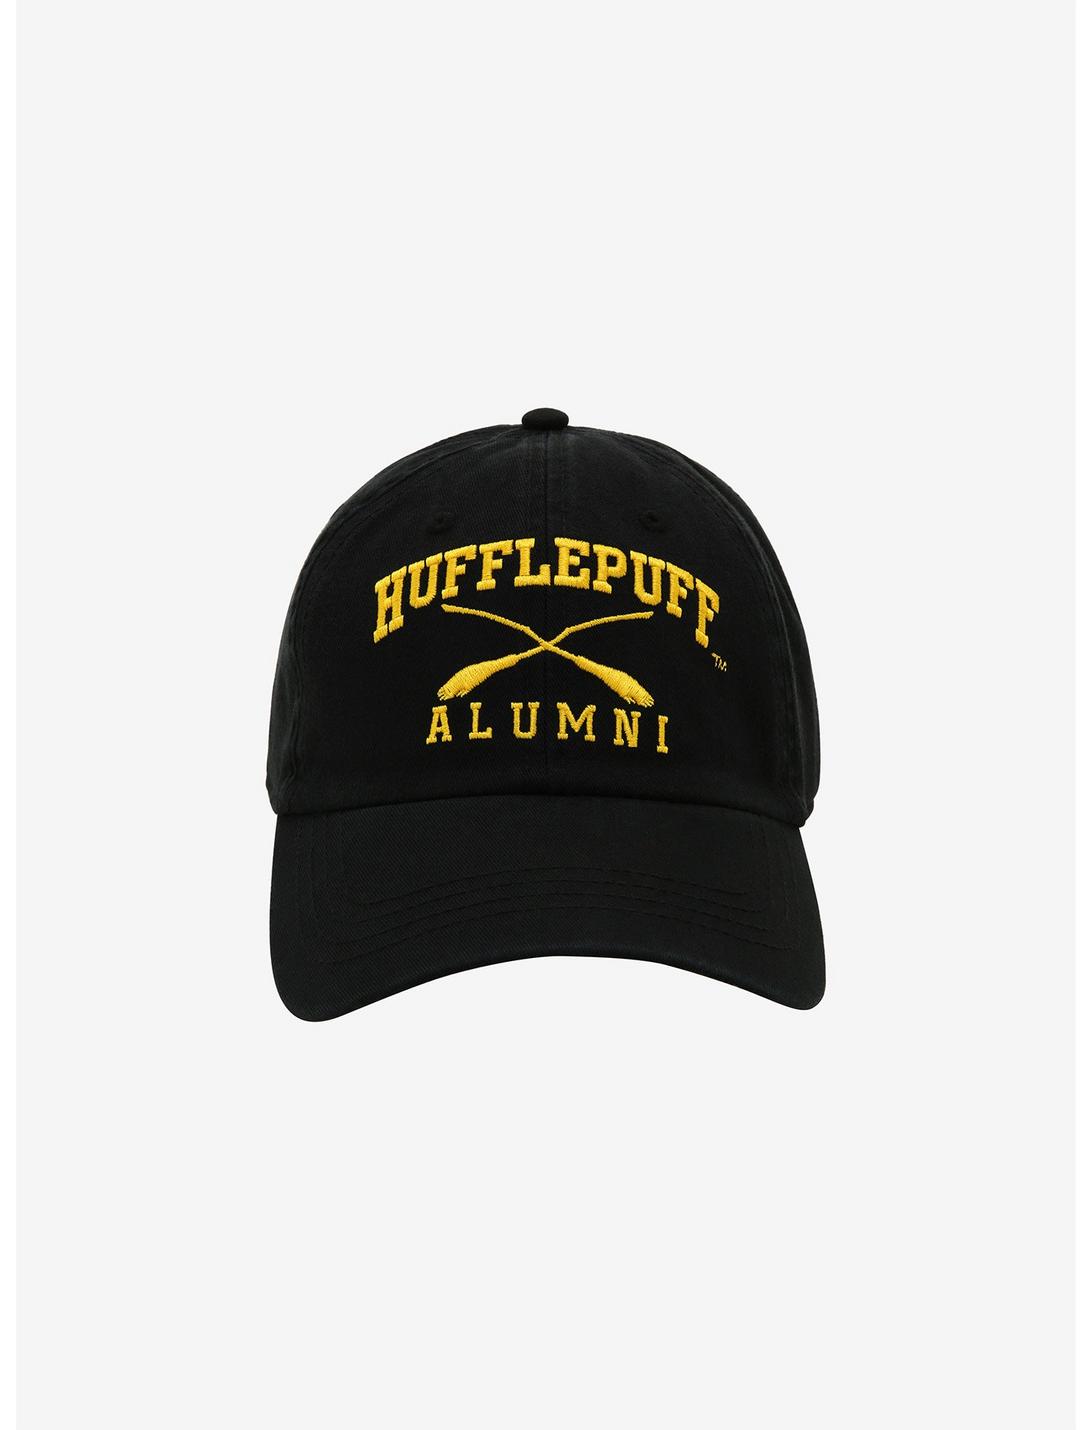 Harry Potter Hufflepuff Alumni Cap - BoxLunch Exclusive | BoxLunch